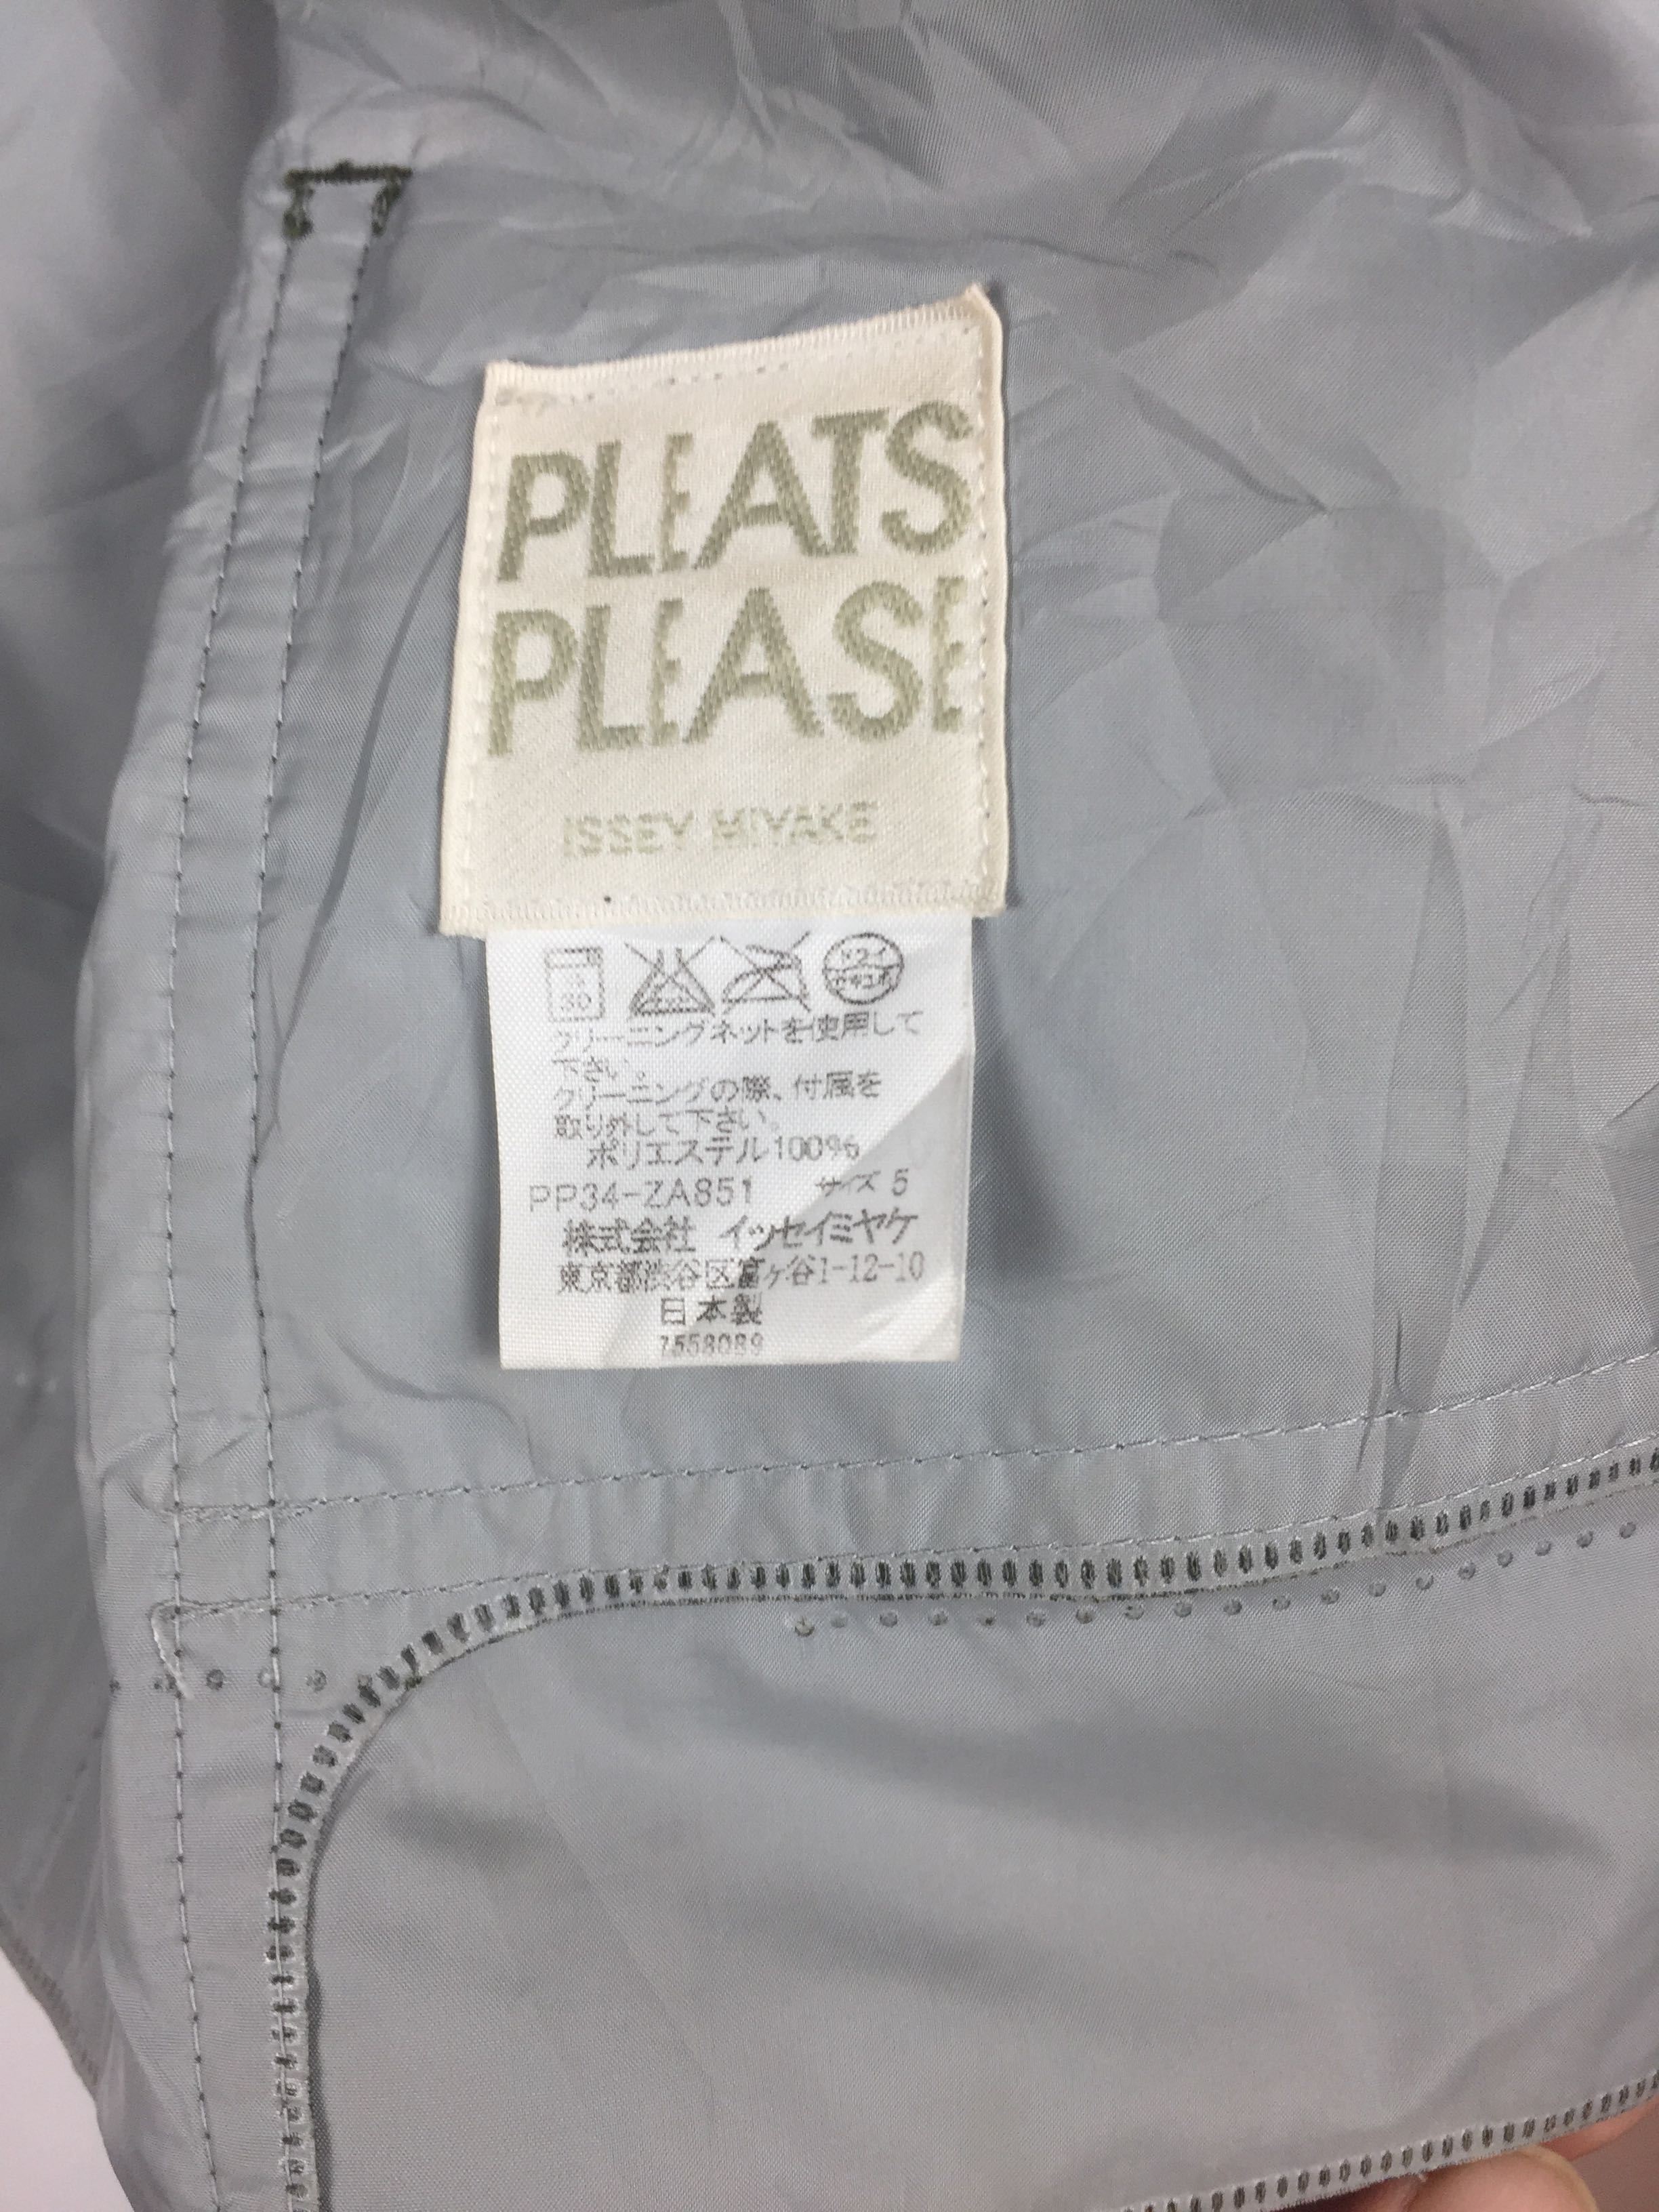 Vintage Pleats Please jacket by Issey Miyake - 7